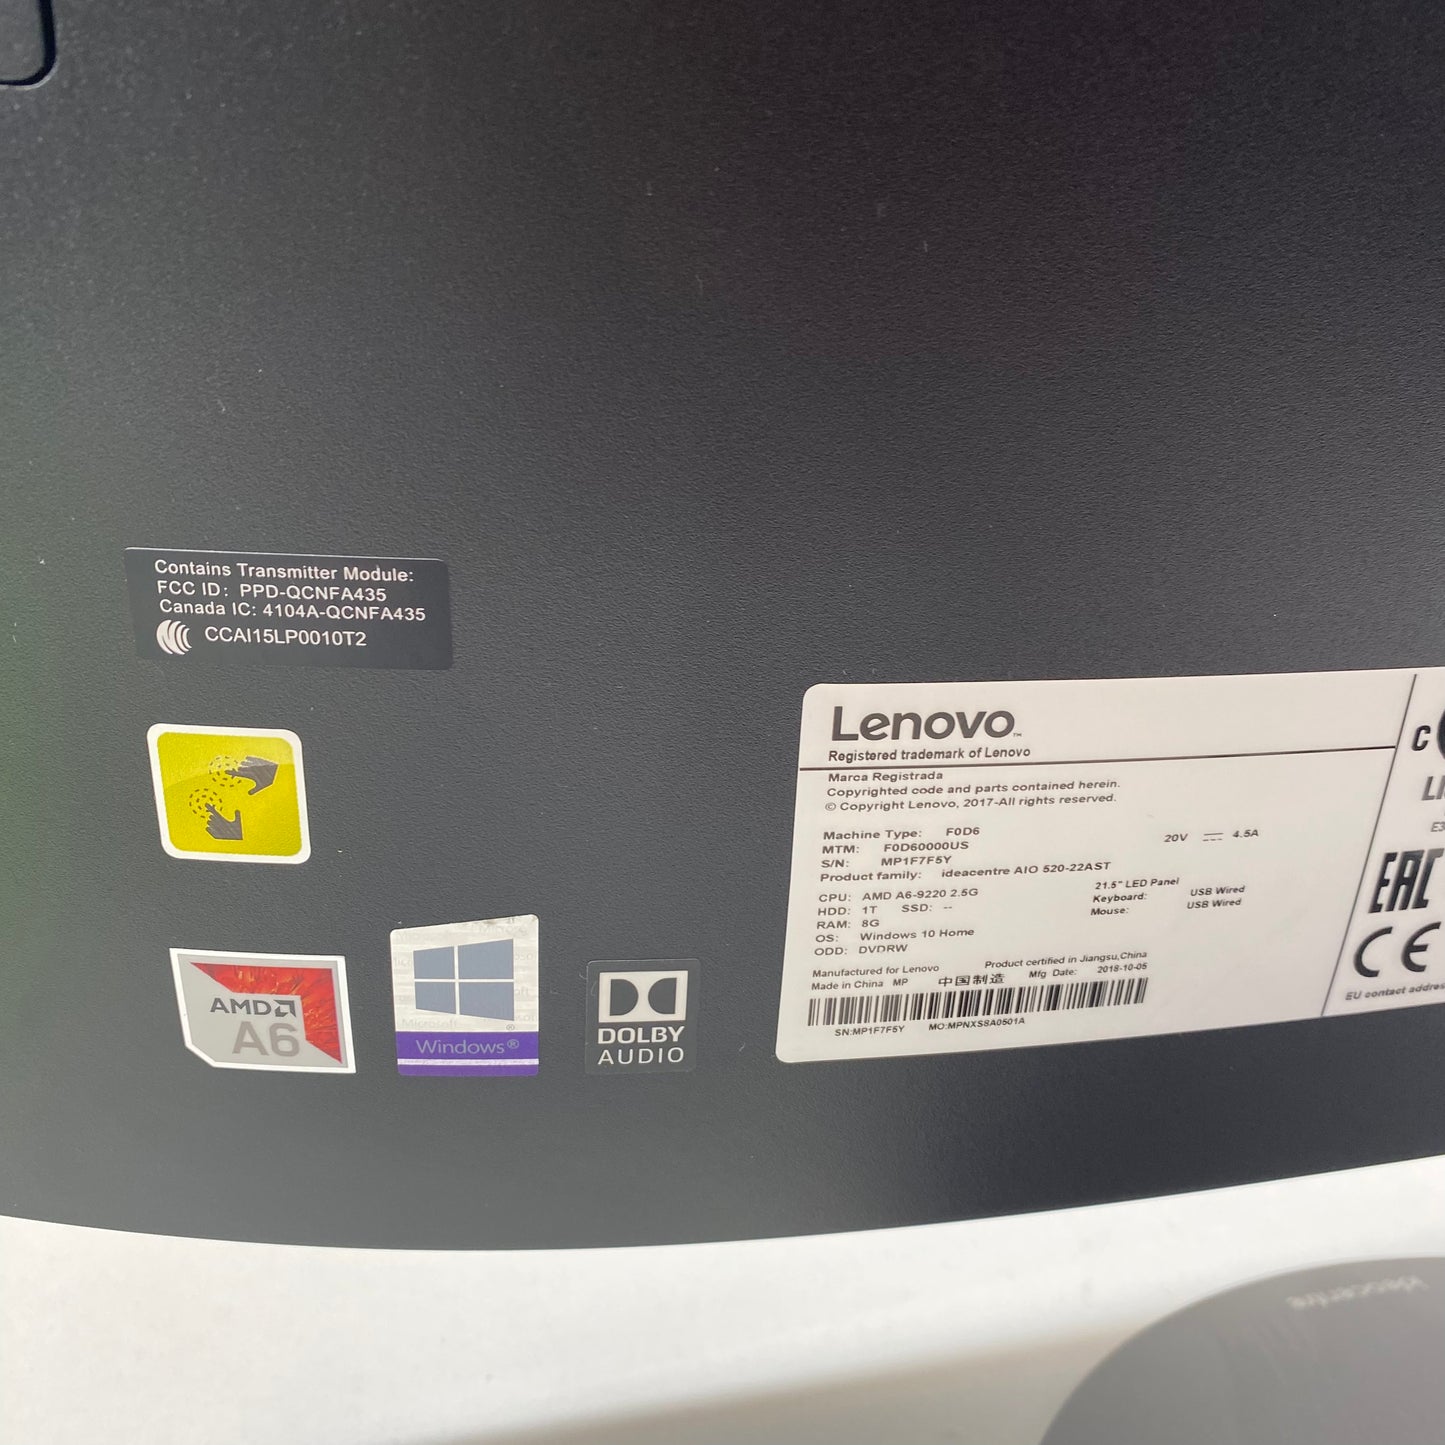 Lenovo AIO 520-22AST 23.8" A6-9200 2.50GHz 8GB RAM 1TB HDD